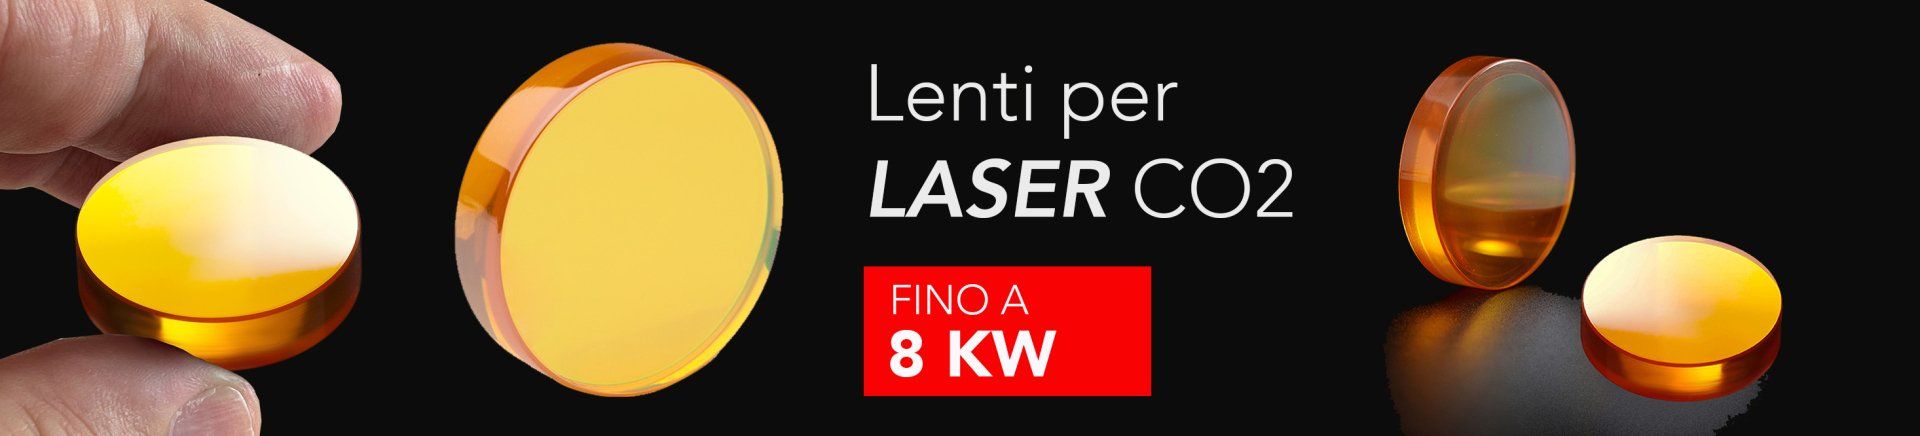 lenti laser Bystronic